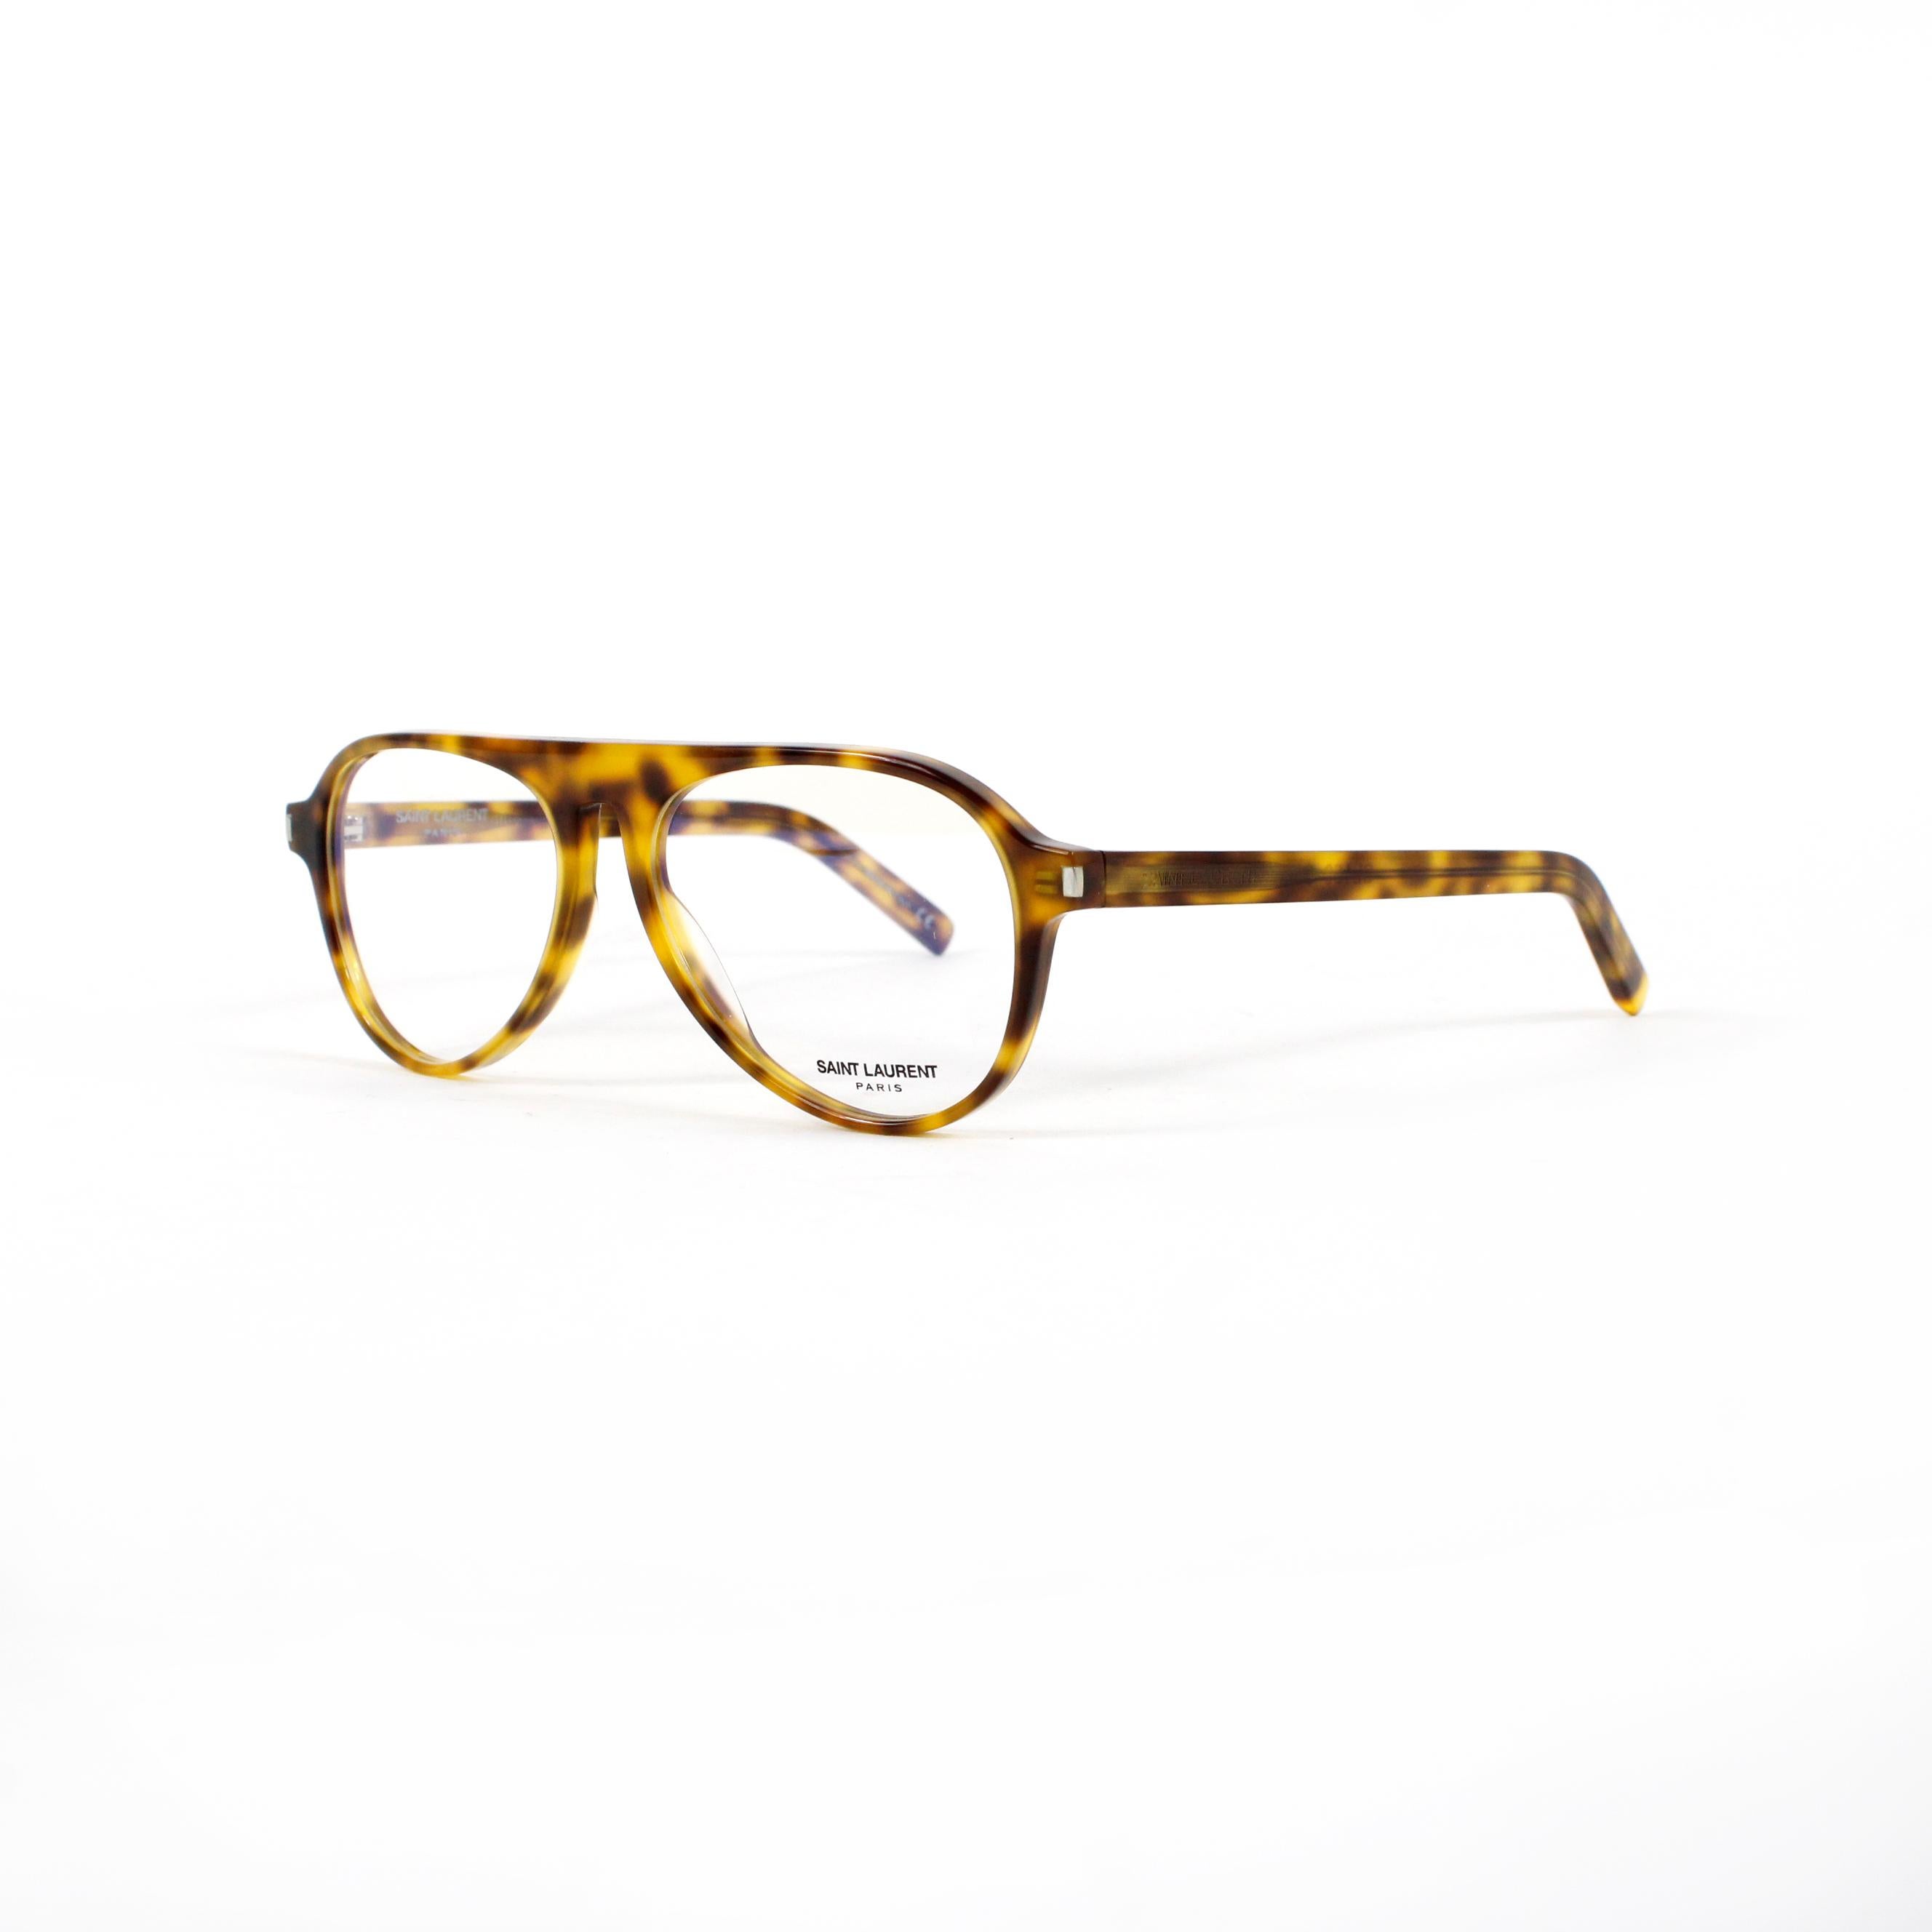 Saint Laurent eyeglasses, aviator model, havana color. Unisex.

Condition: new.

Packaging/Accessories:
Case.